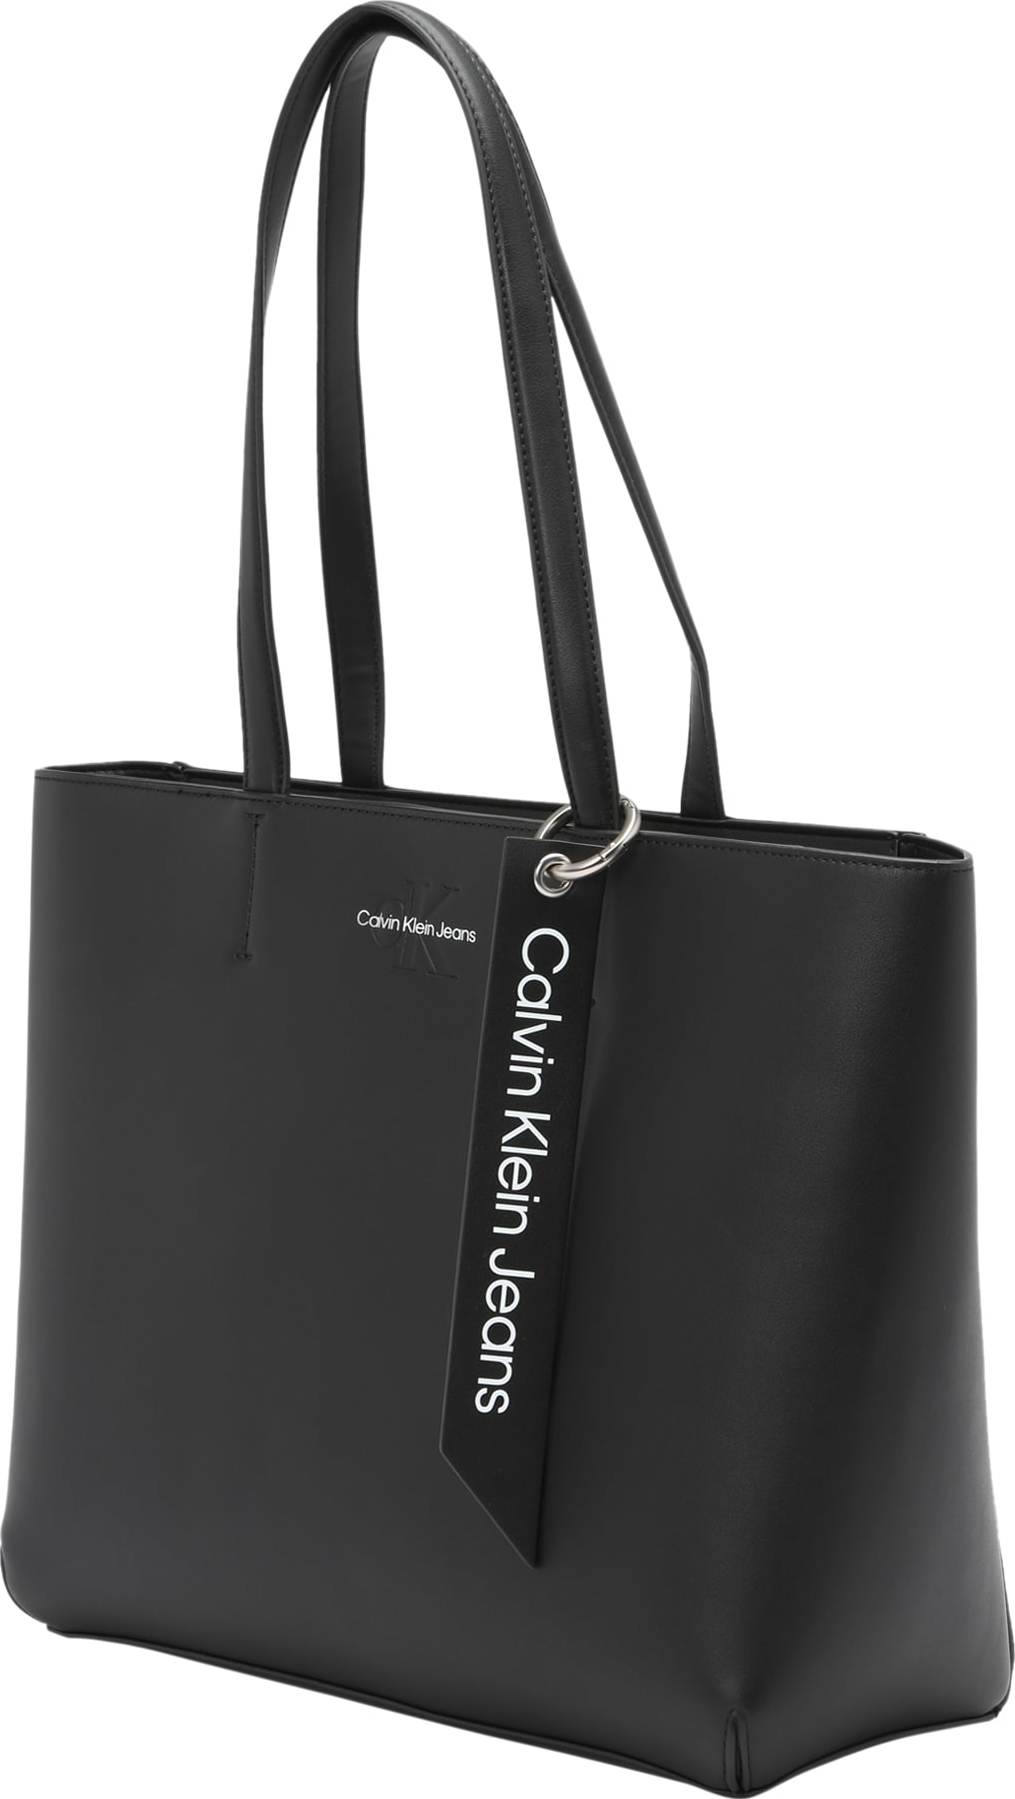 Calvin Klein Jeans Nákupní taška černá / bílá